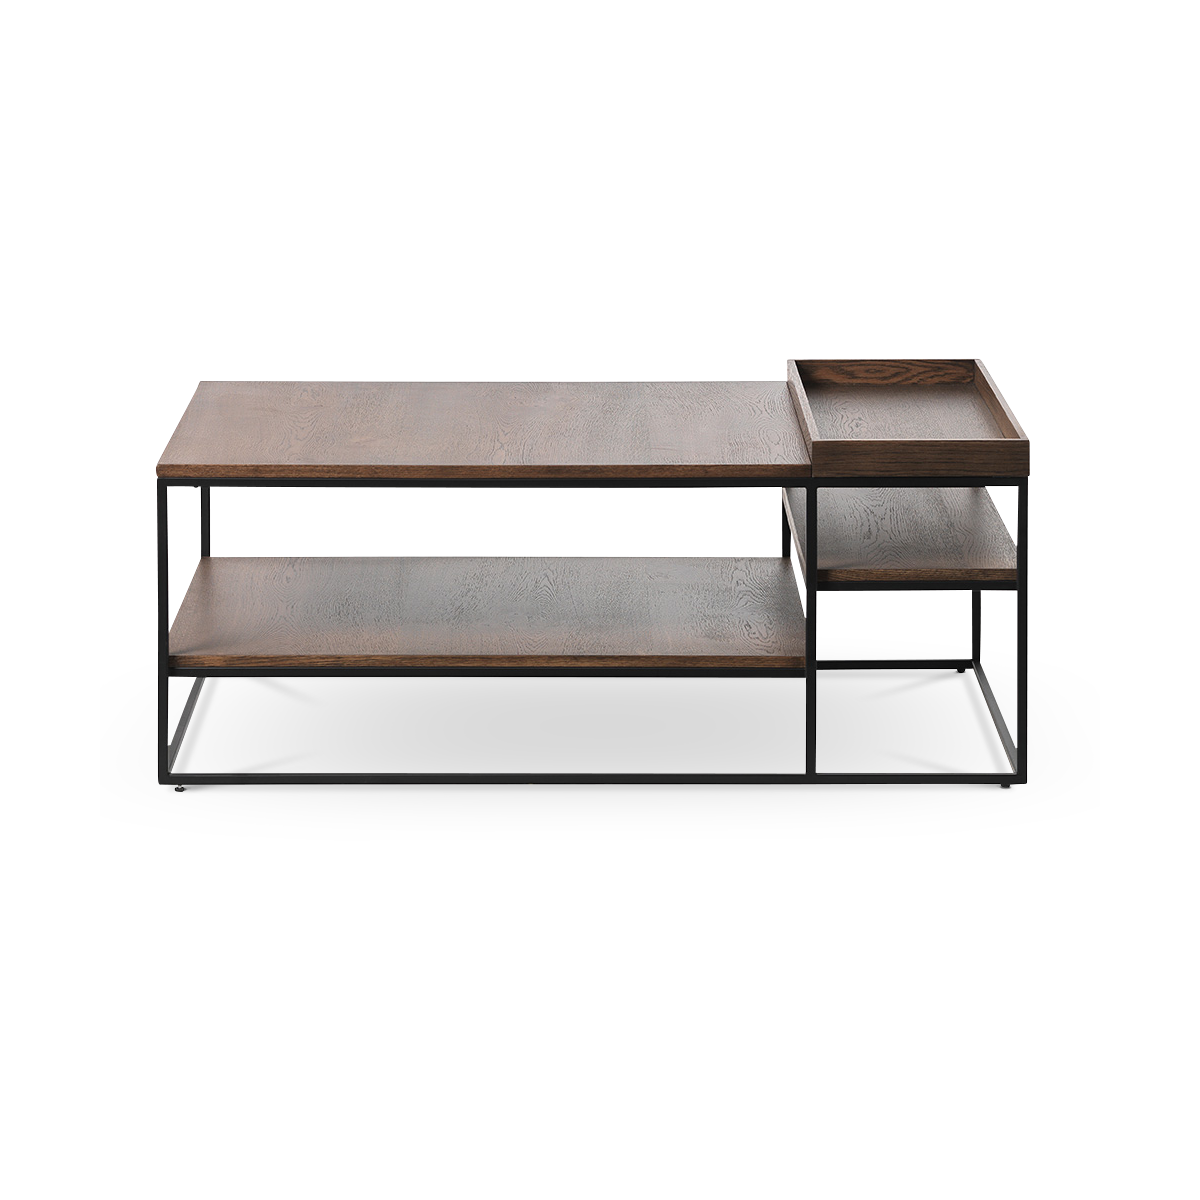 Rico houten salontafel gerookt eiken - 120 x 70 cm